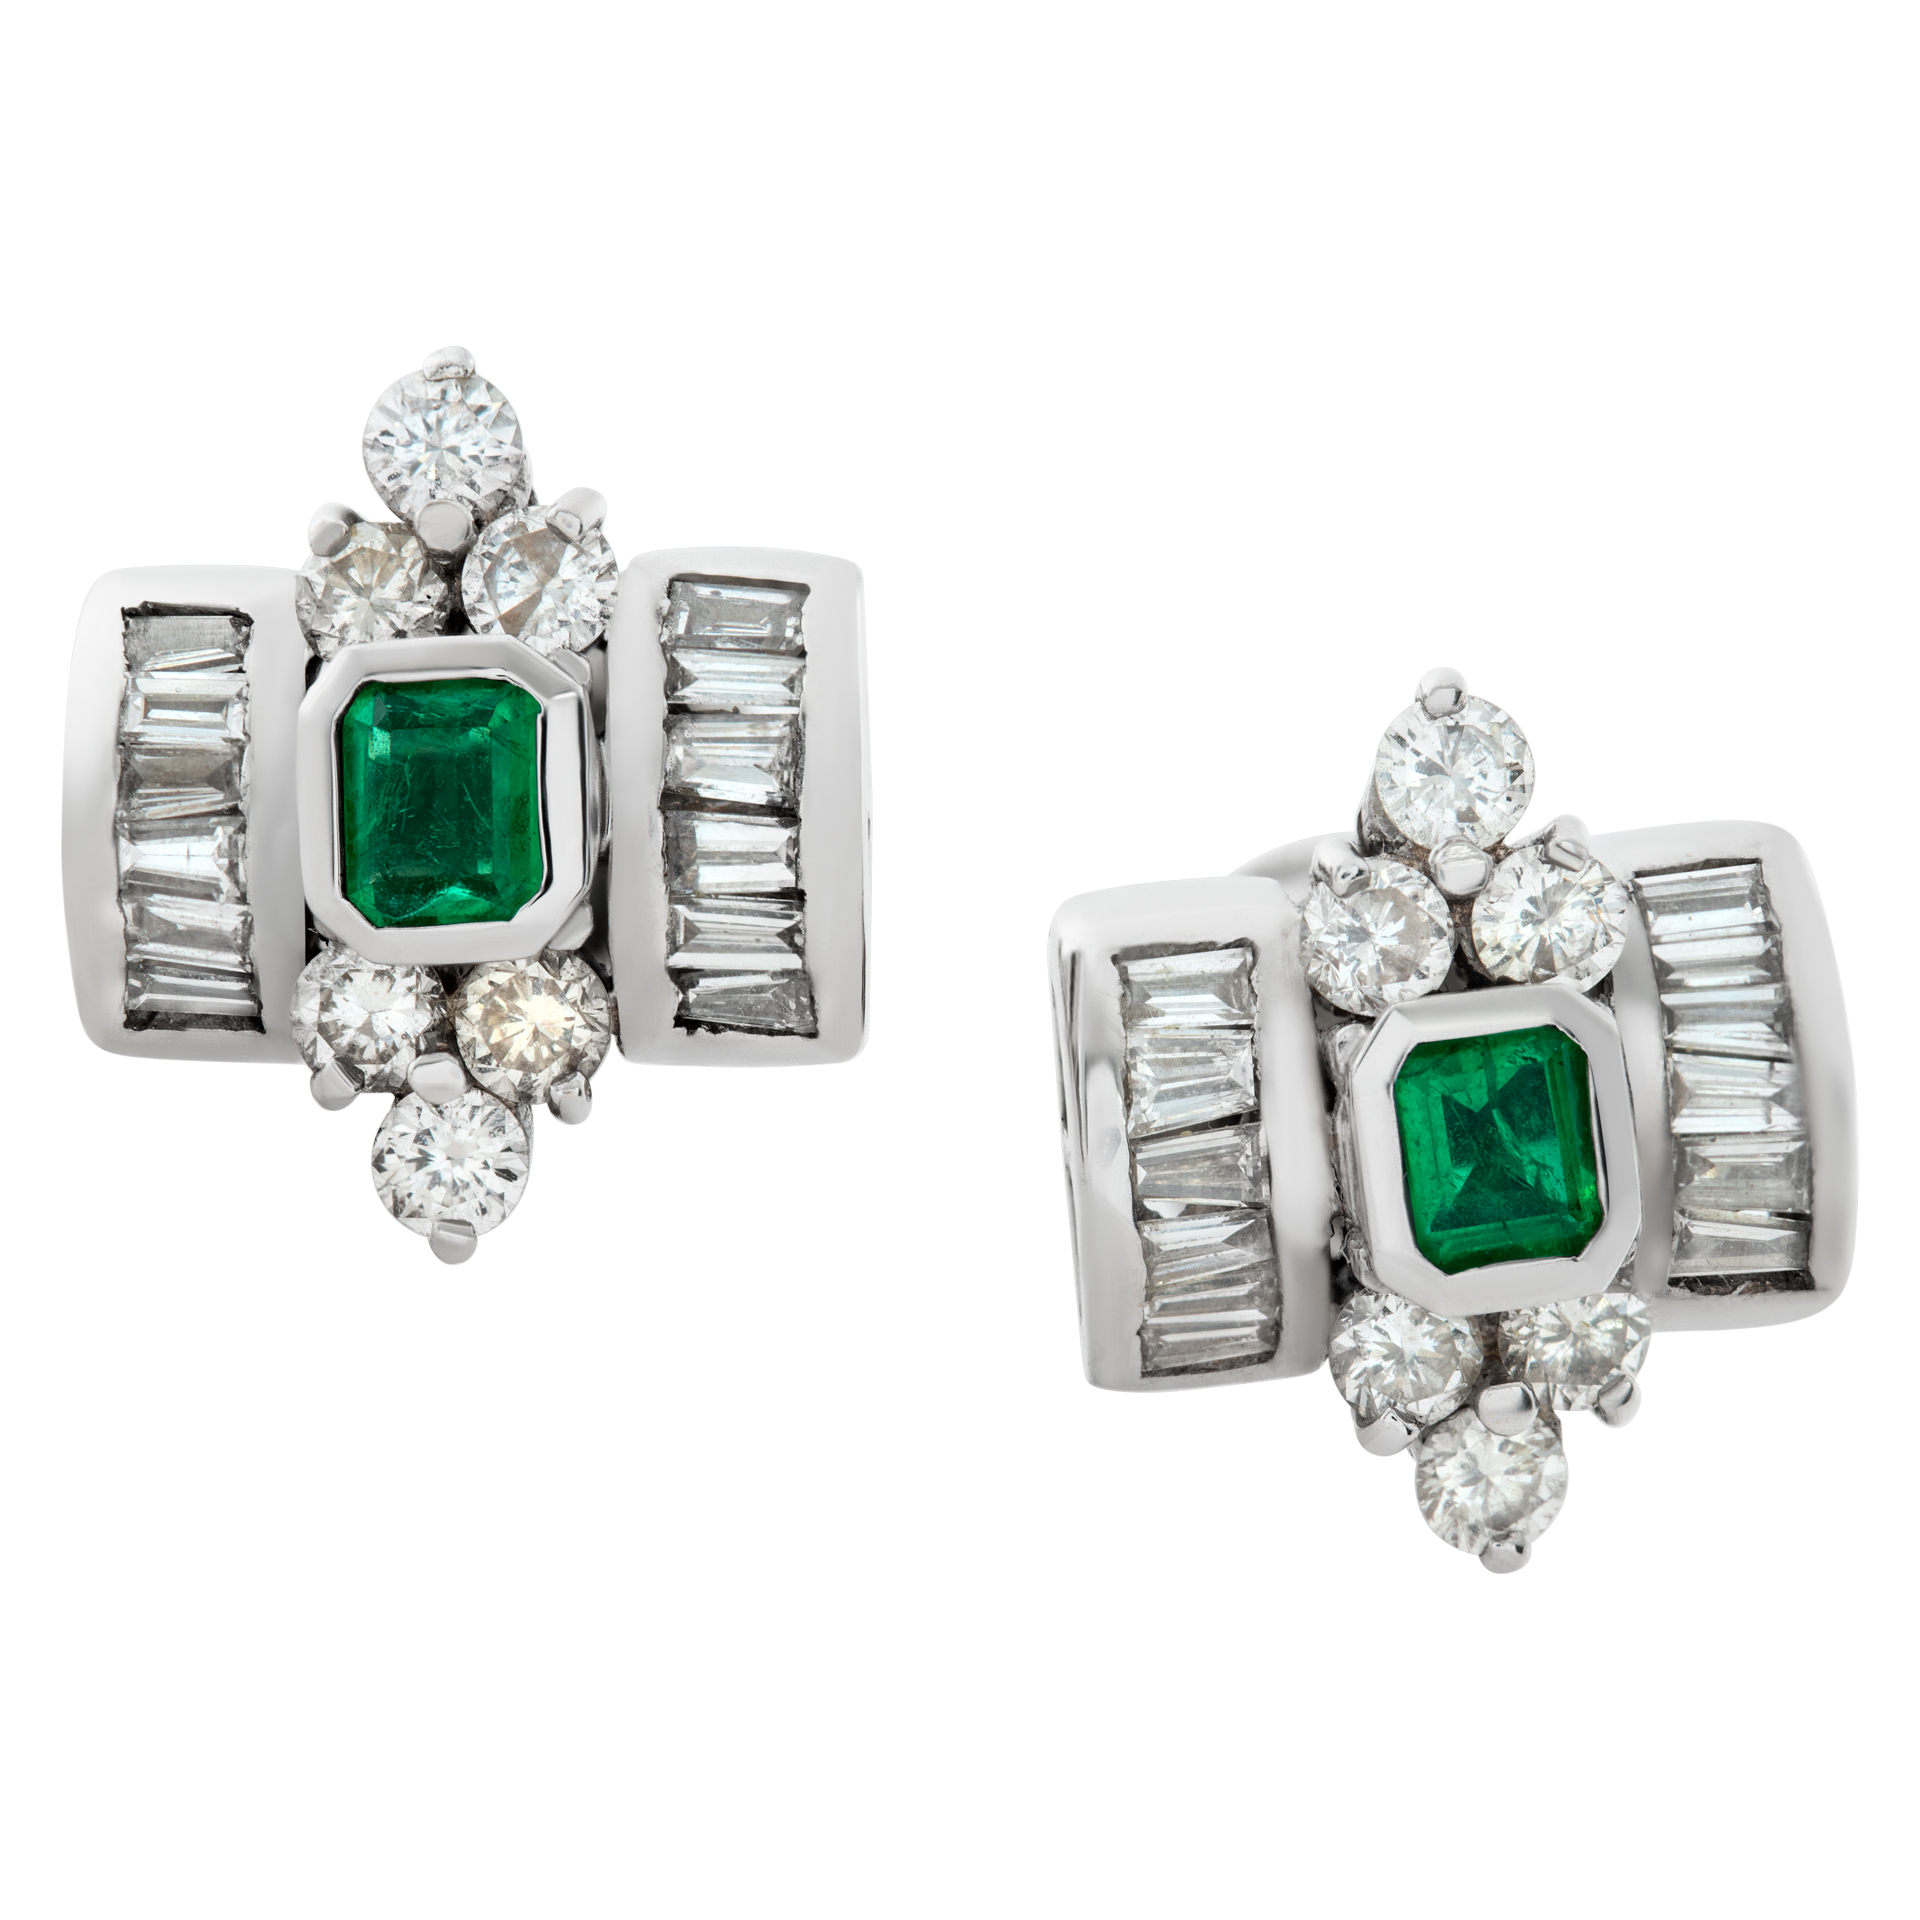 Diamond & emerald earrings in 14k white gold with screw earring backs (Stones)